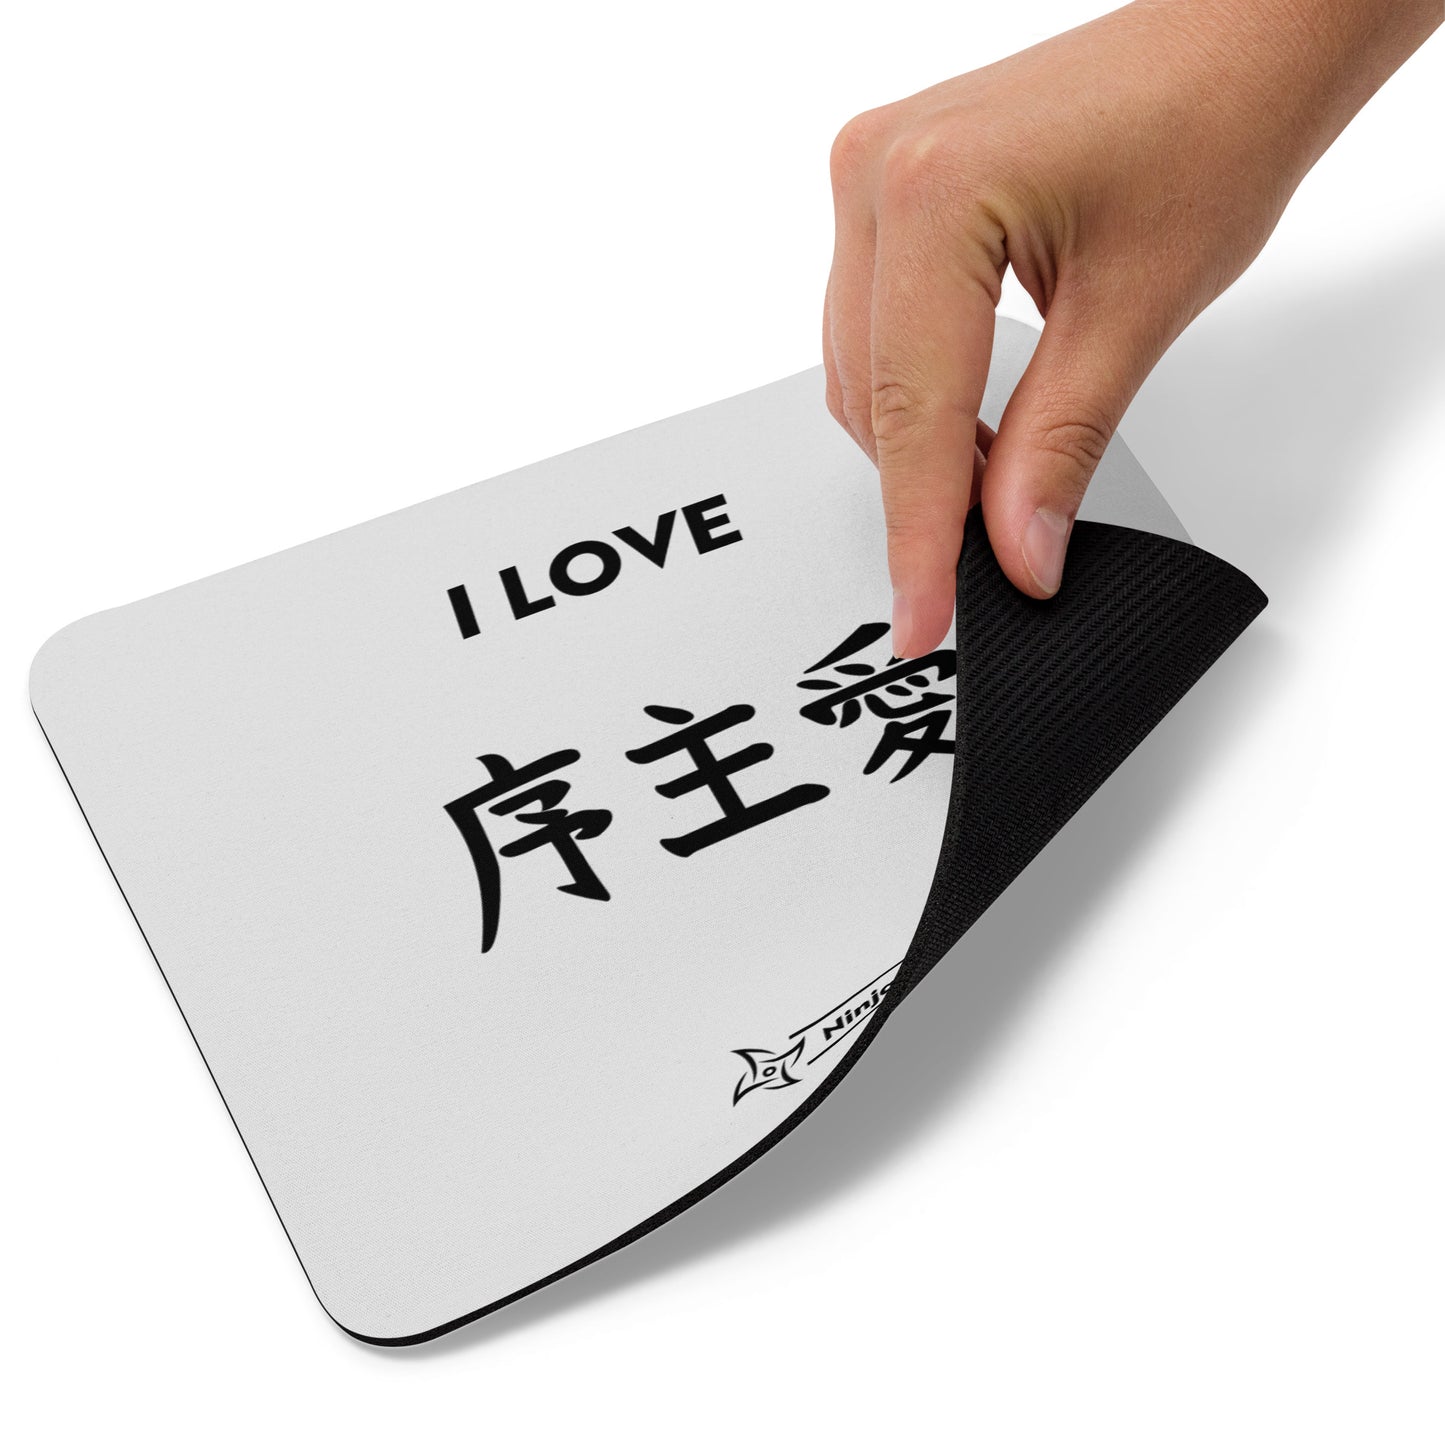 "Joshua" in Japanese Kanji, Mouse pad (Light color, "I LOVE" series)